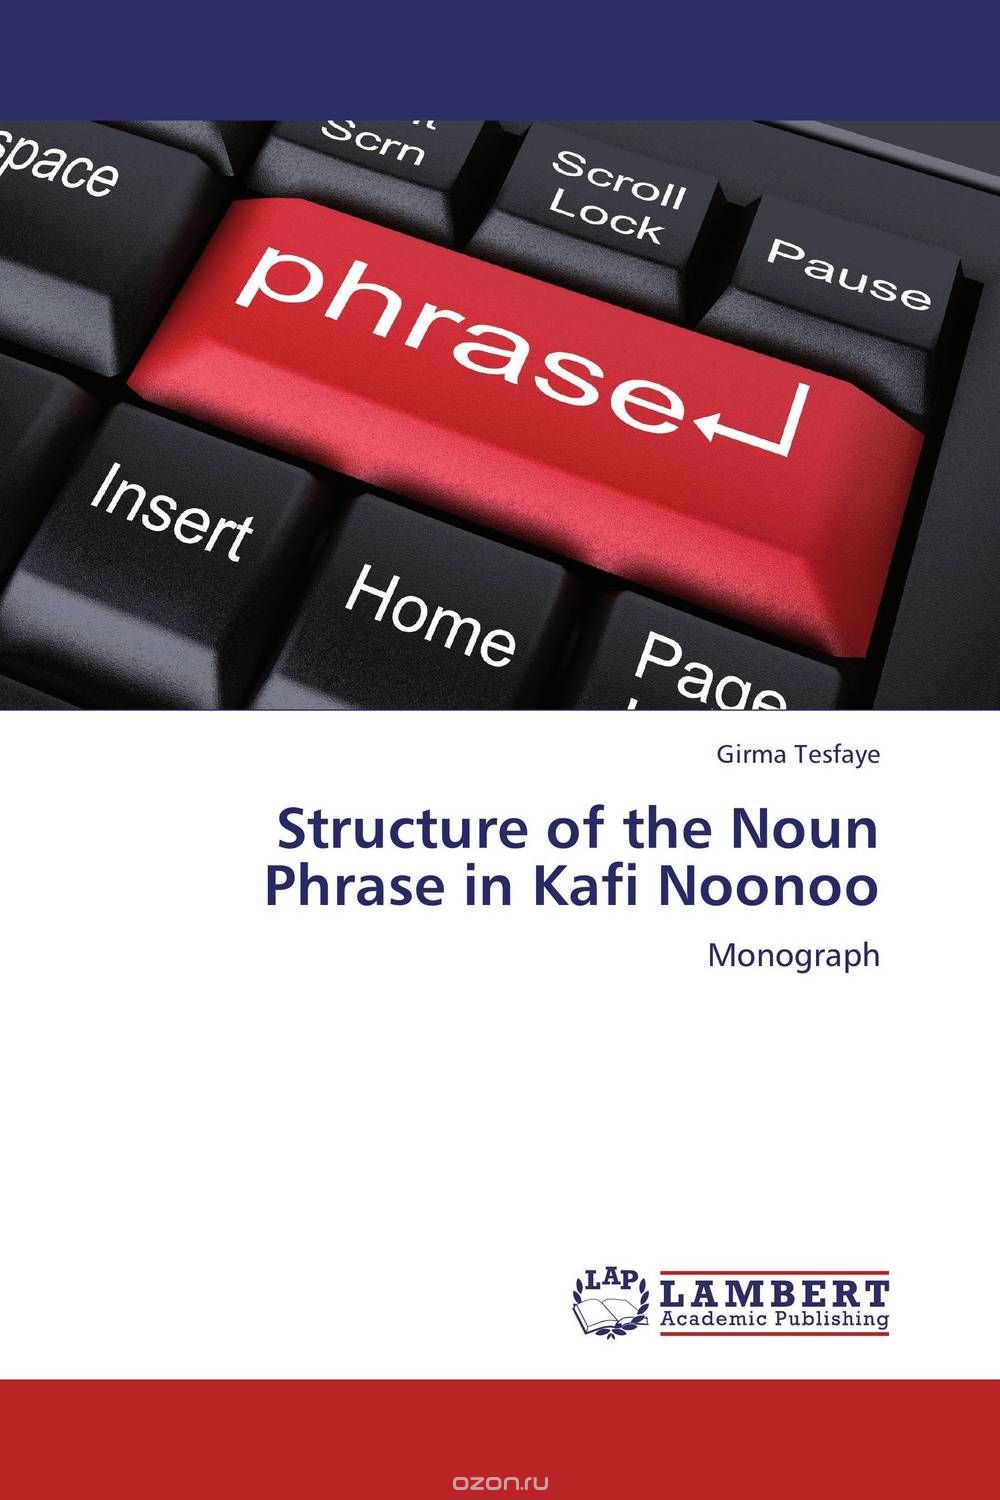 Скачать книгу "Structure of the Noun Phrase in Kafi Noonoo"